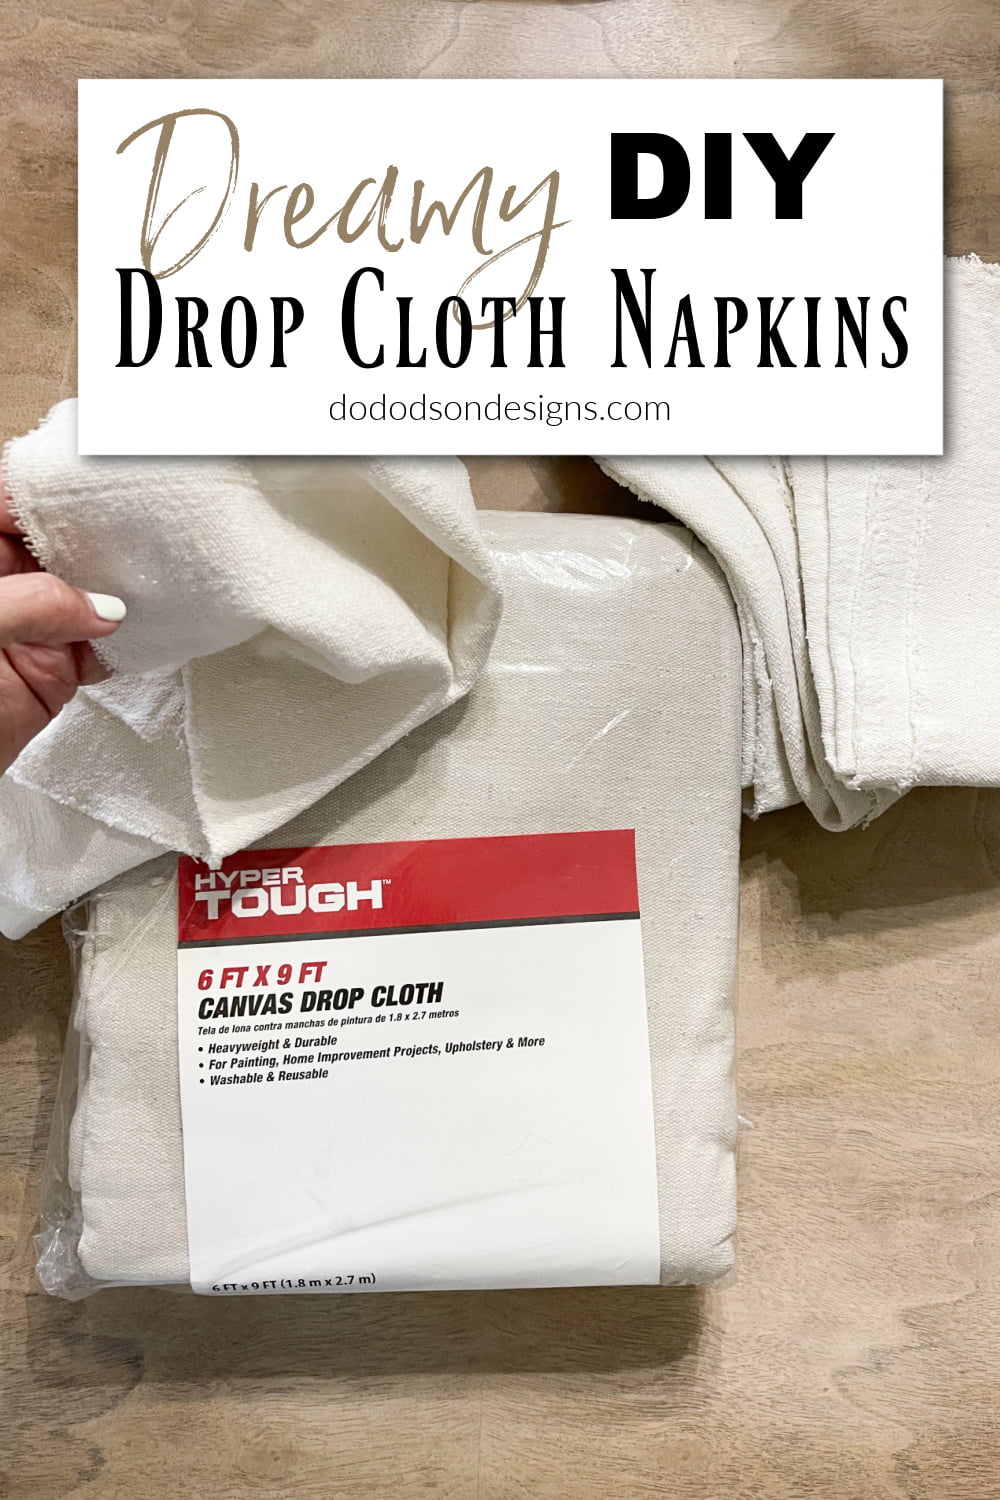 https://www.dododsondesigns.com/wp-content/uploads/2021/09/drop-cloth-napkins-12.jpg